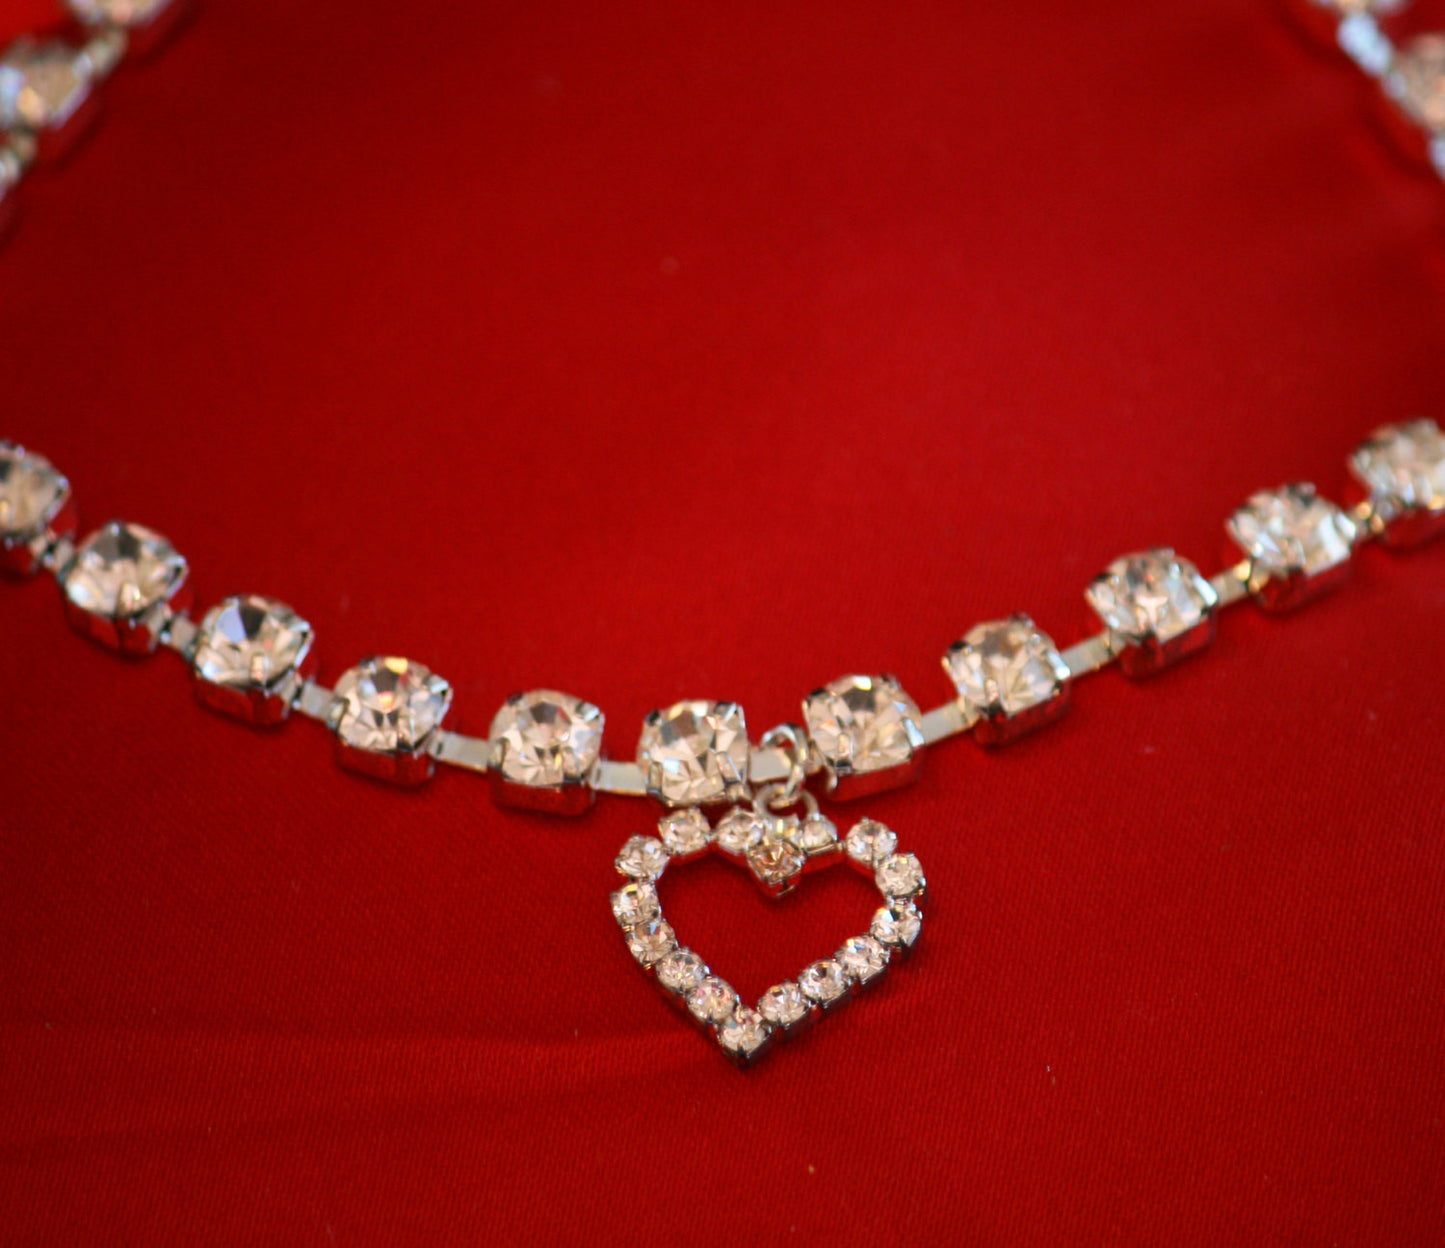 Dog jewelry- Rhinestone Pet wedding accessories, Dog jewelry with charm, Heart Charm. Cat jewelry , Wedding dog collar